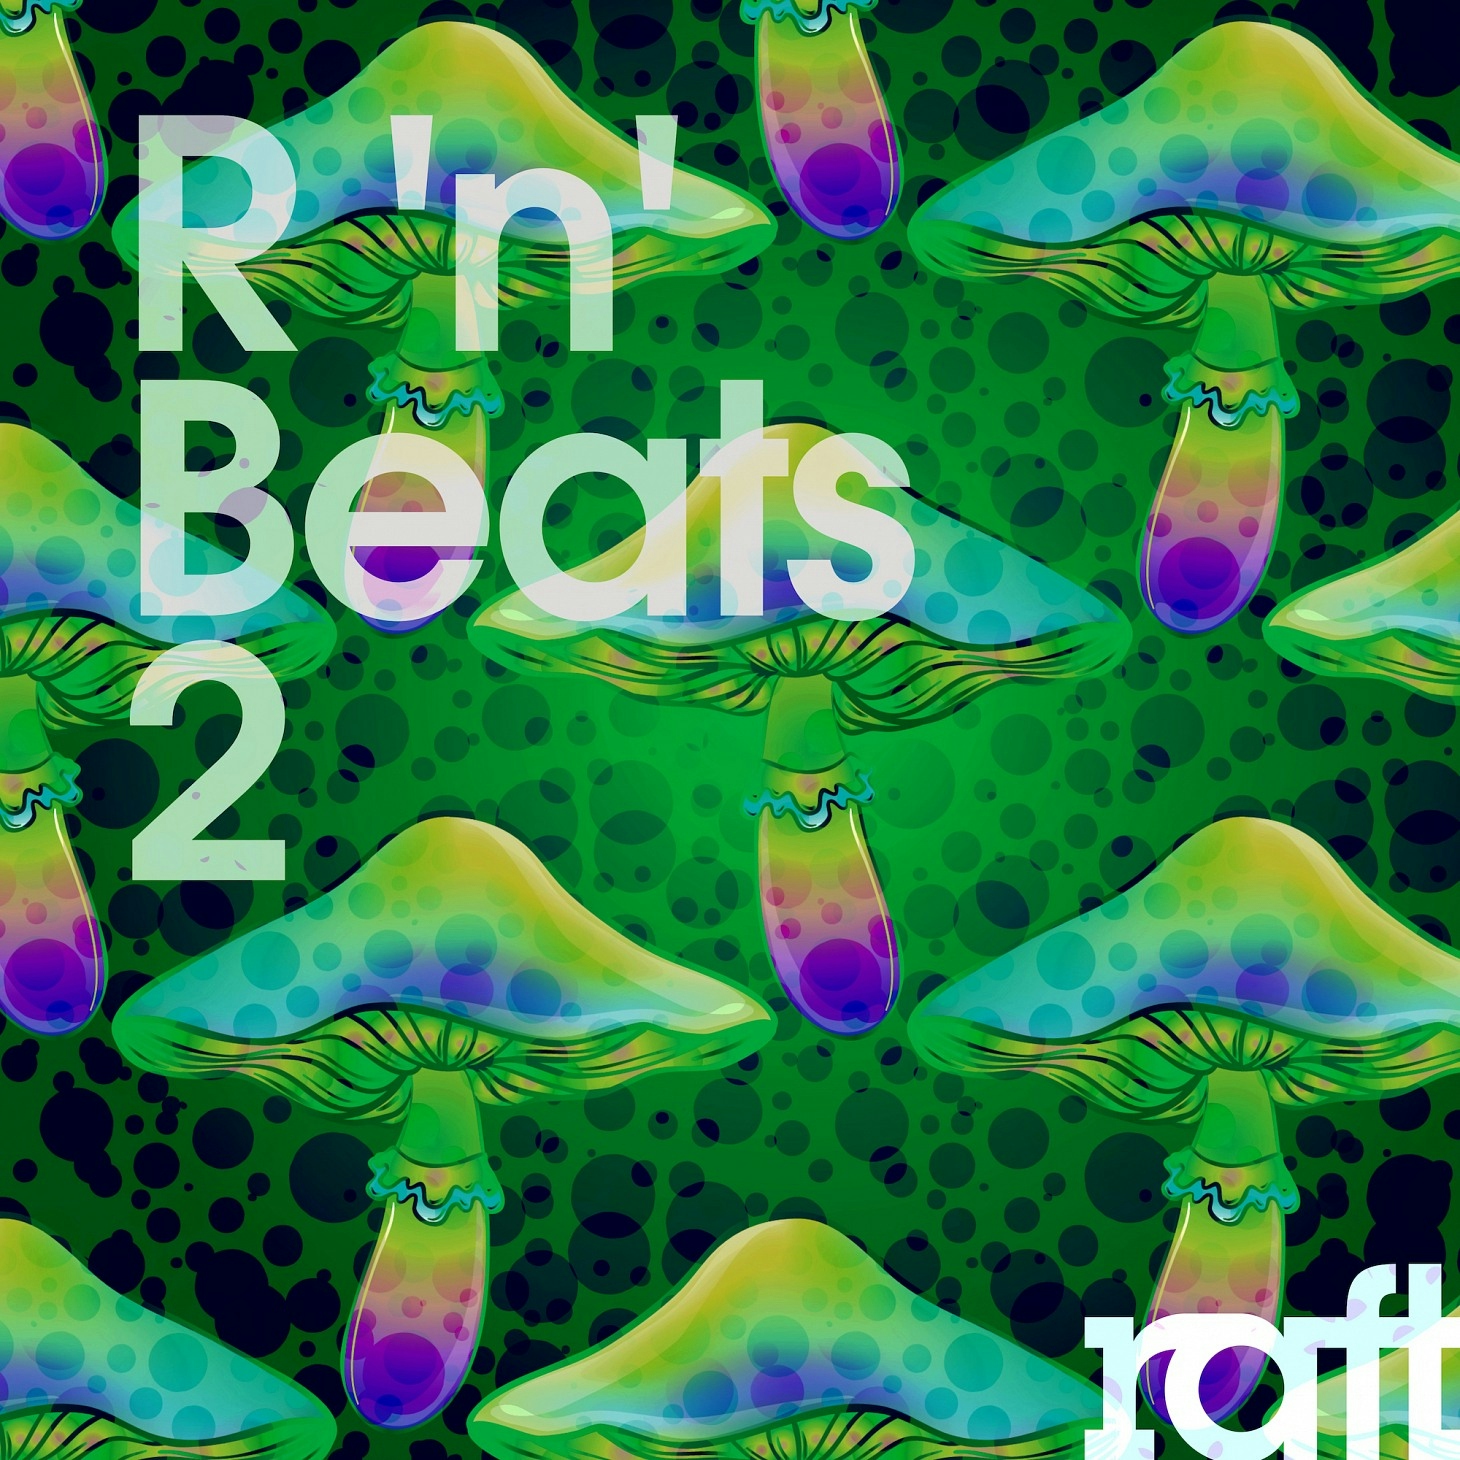 RFT077 R 'n' Beats 2